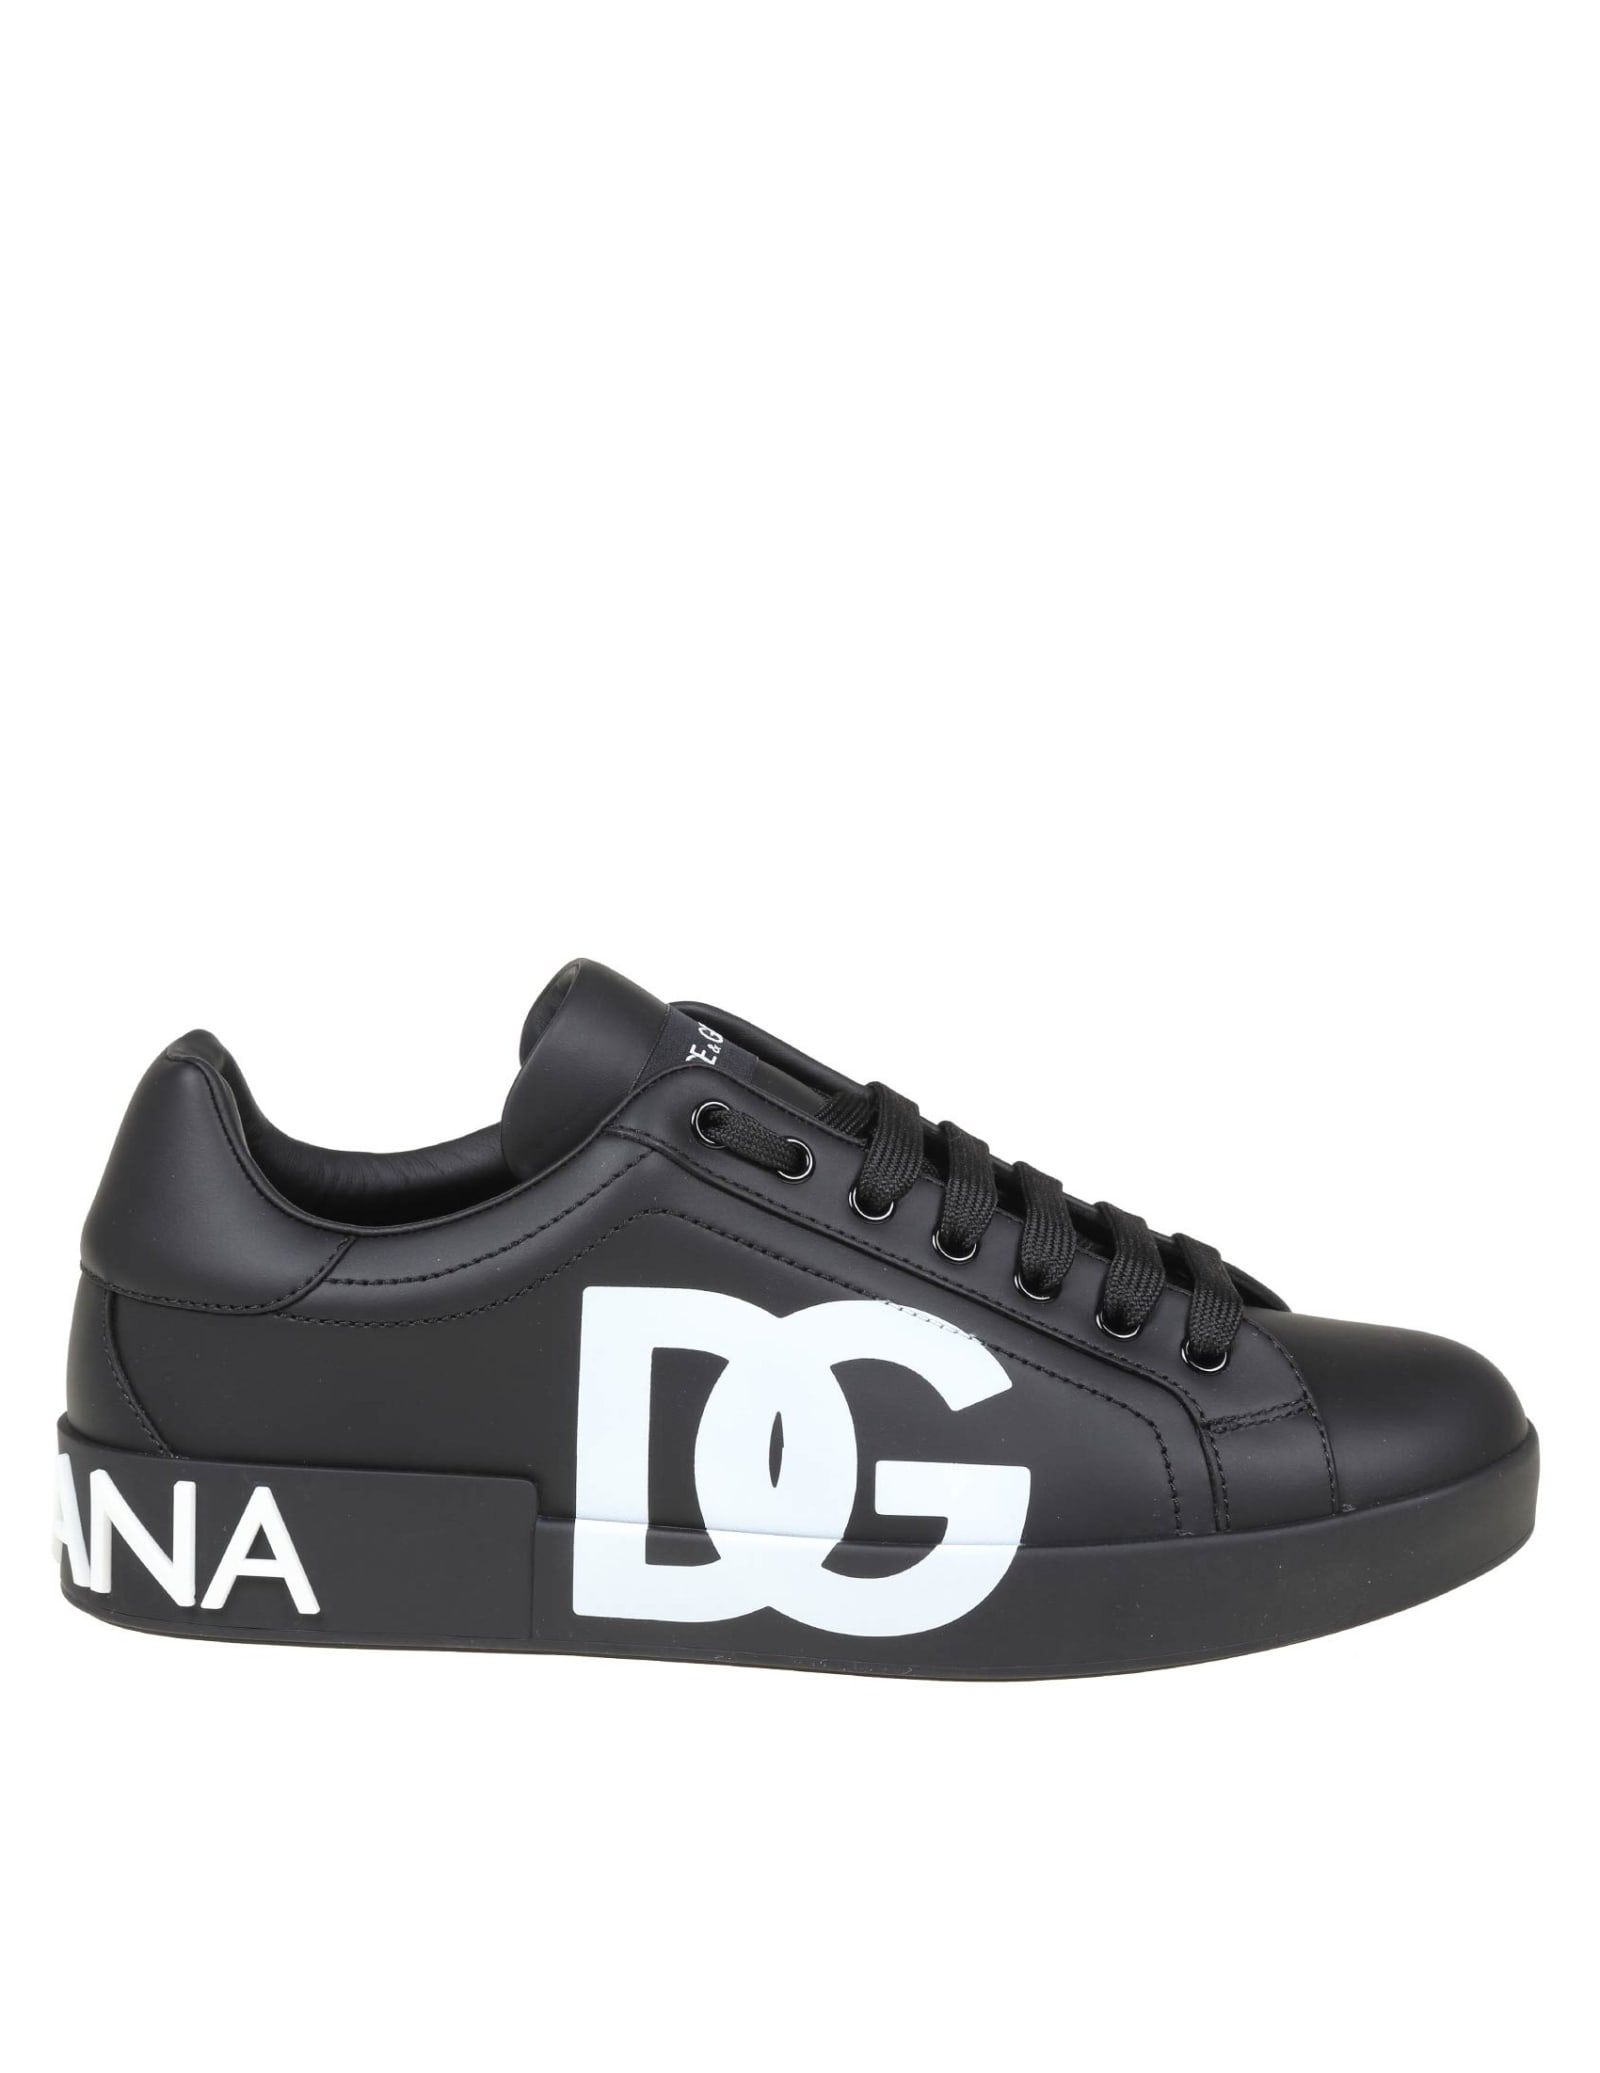 Dolce & Gabbana Portofino Sneakers In Black Leather